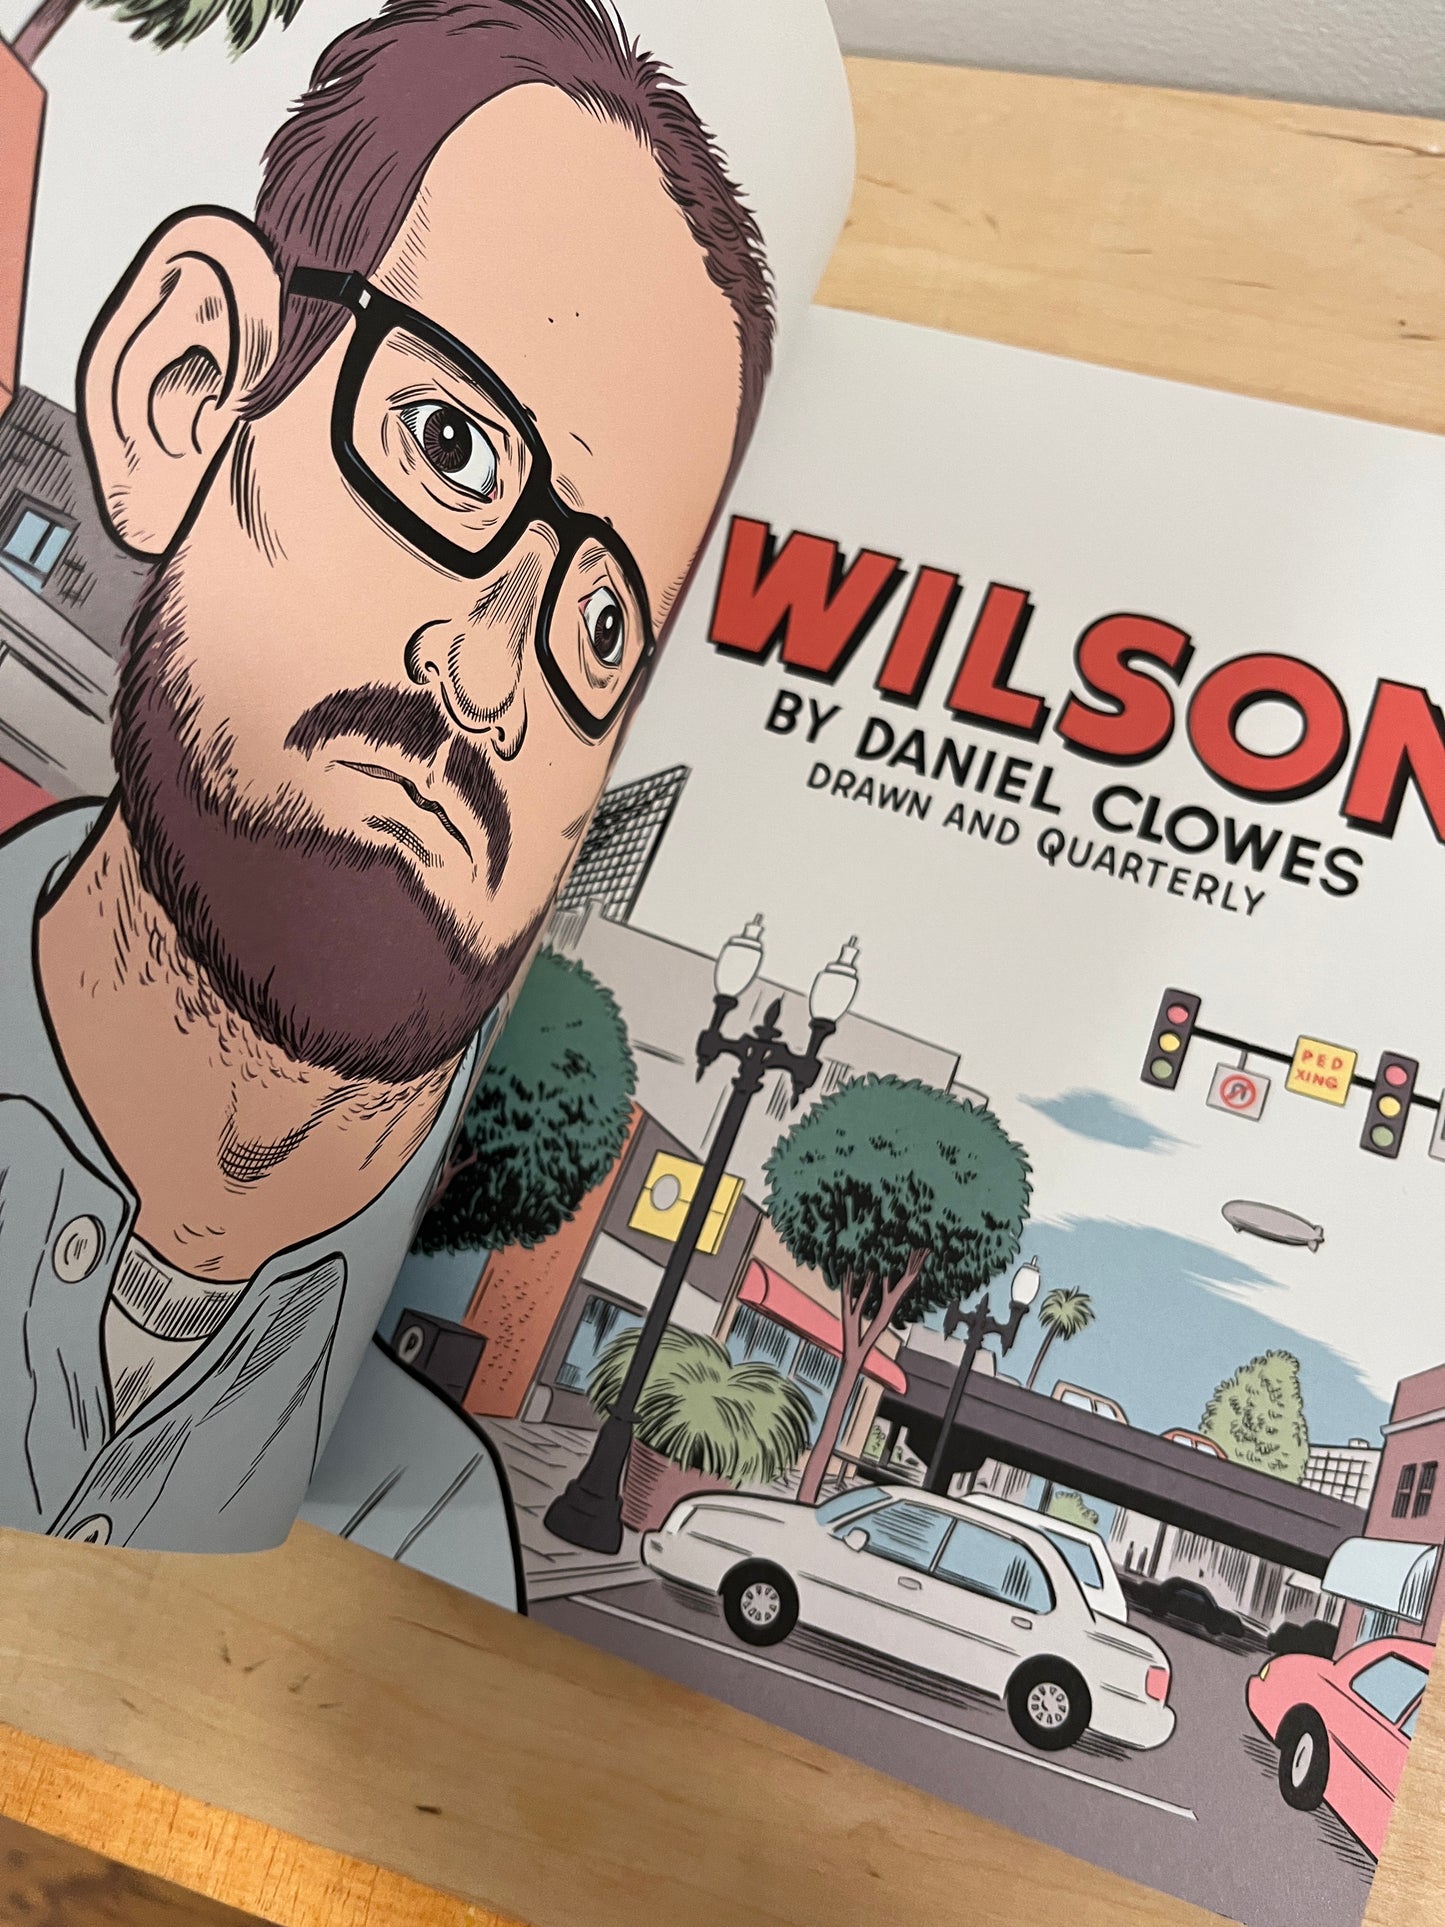 Wilson (paperback)